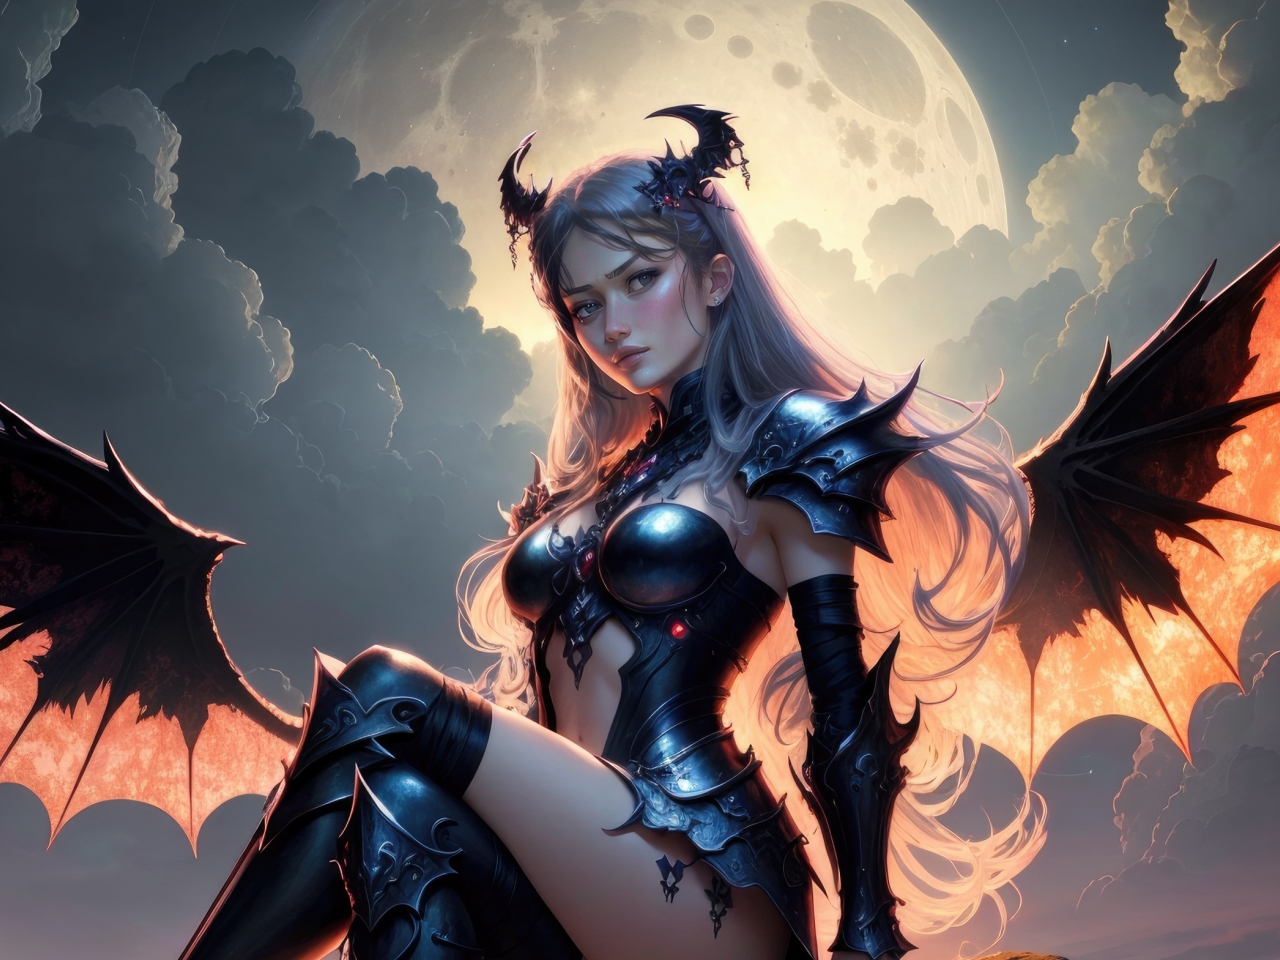 Evil Girl with wings, beautiful angel, art, 1280x960 wallpaper